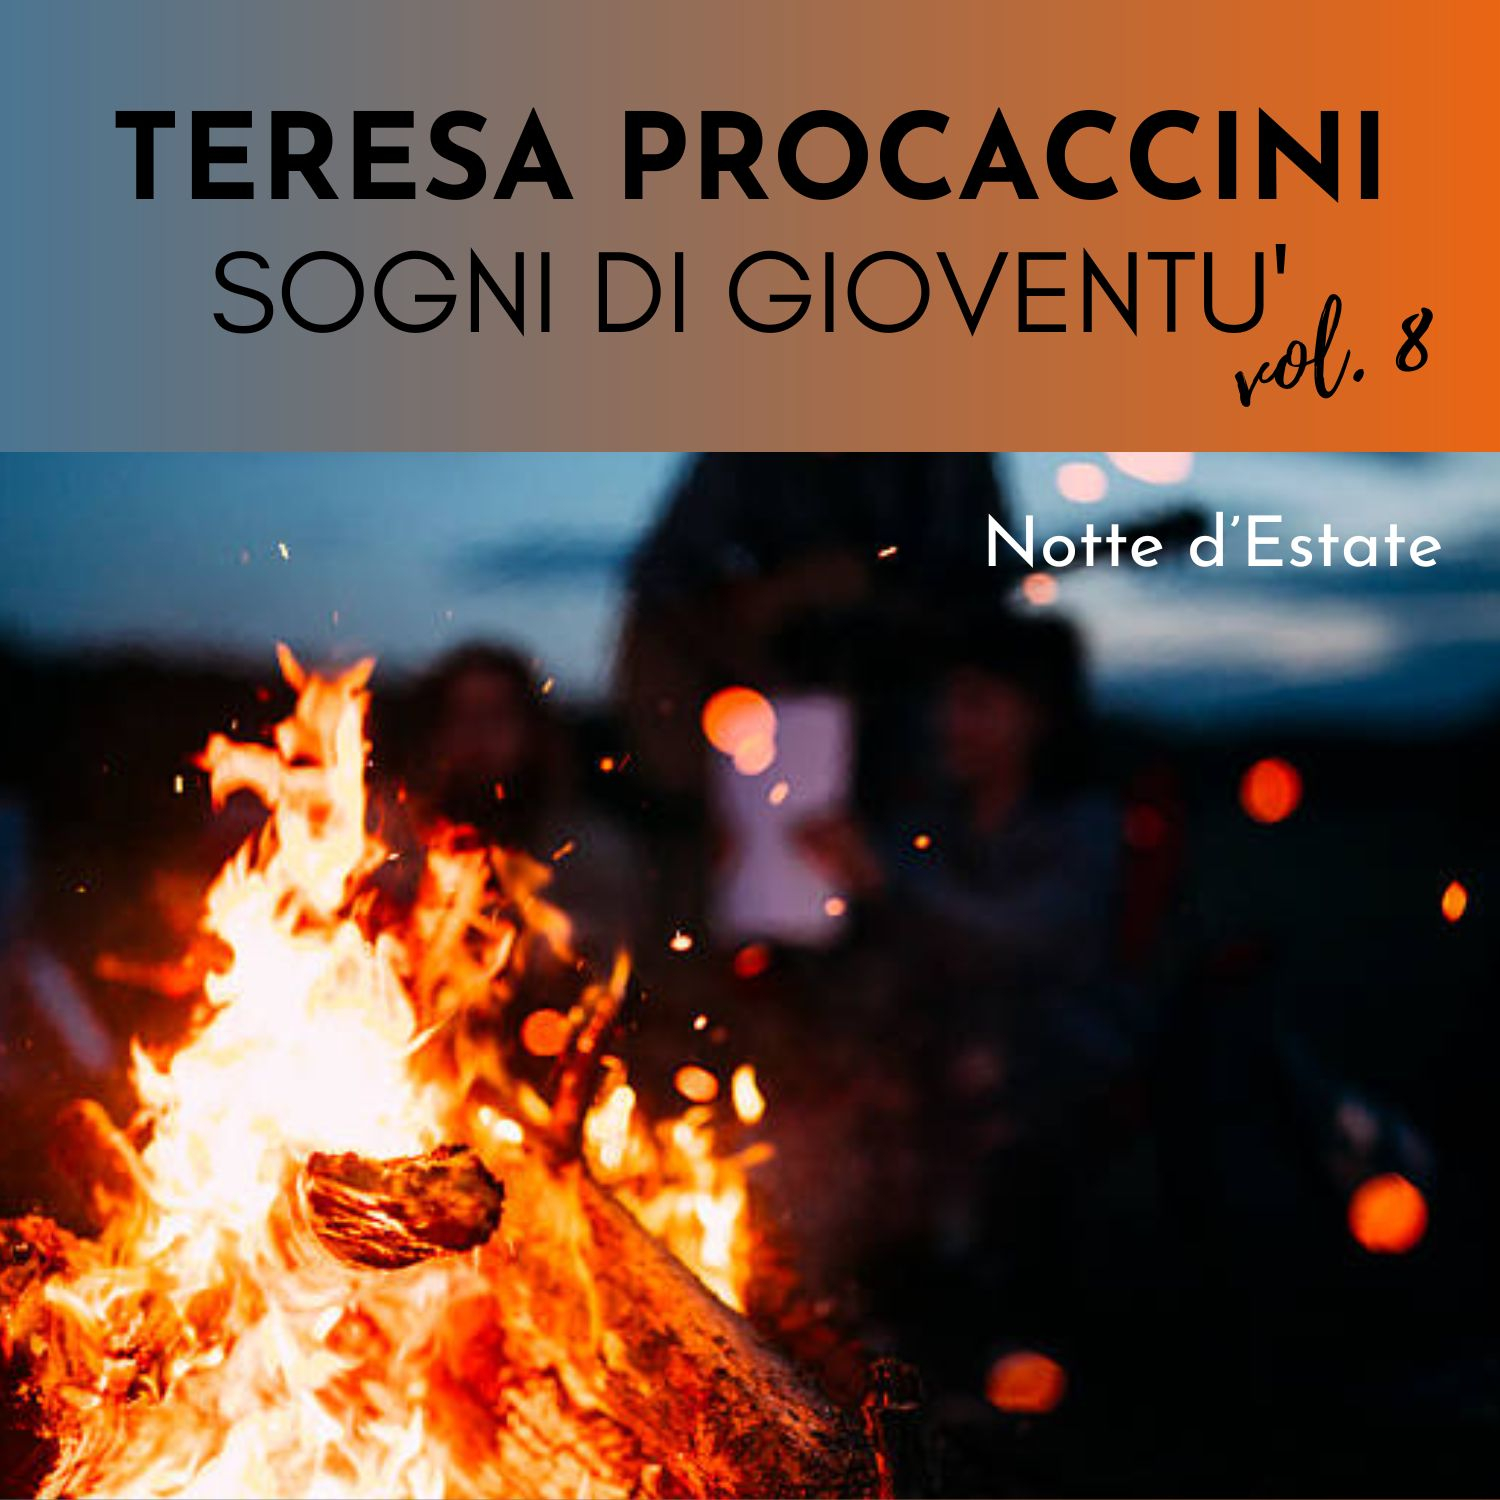 Teresa Procaccini: Sogni di gioventù, Vol. 8 (Notte d'Estate)